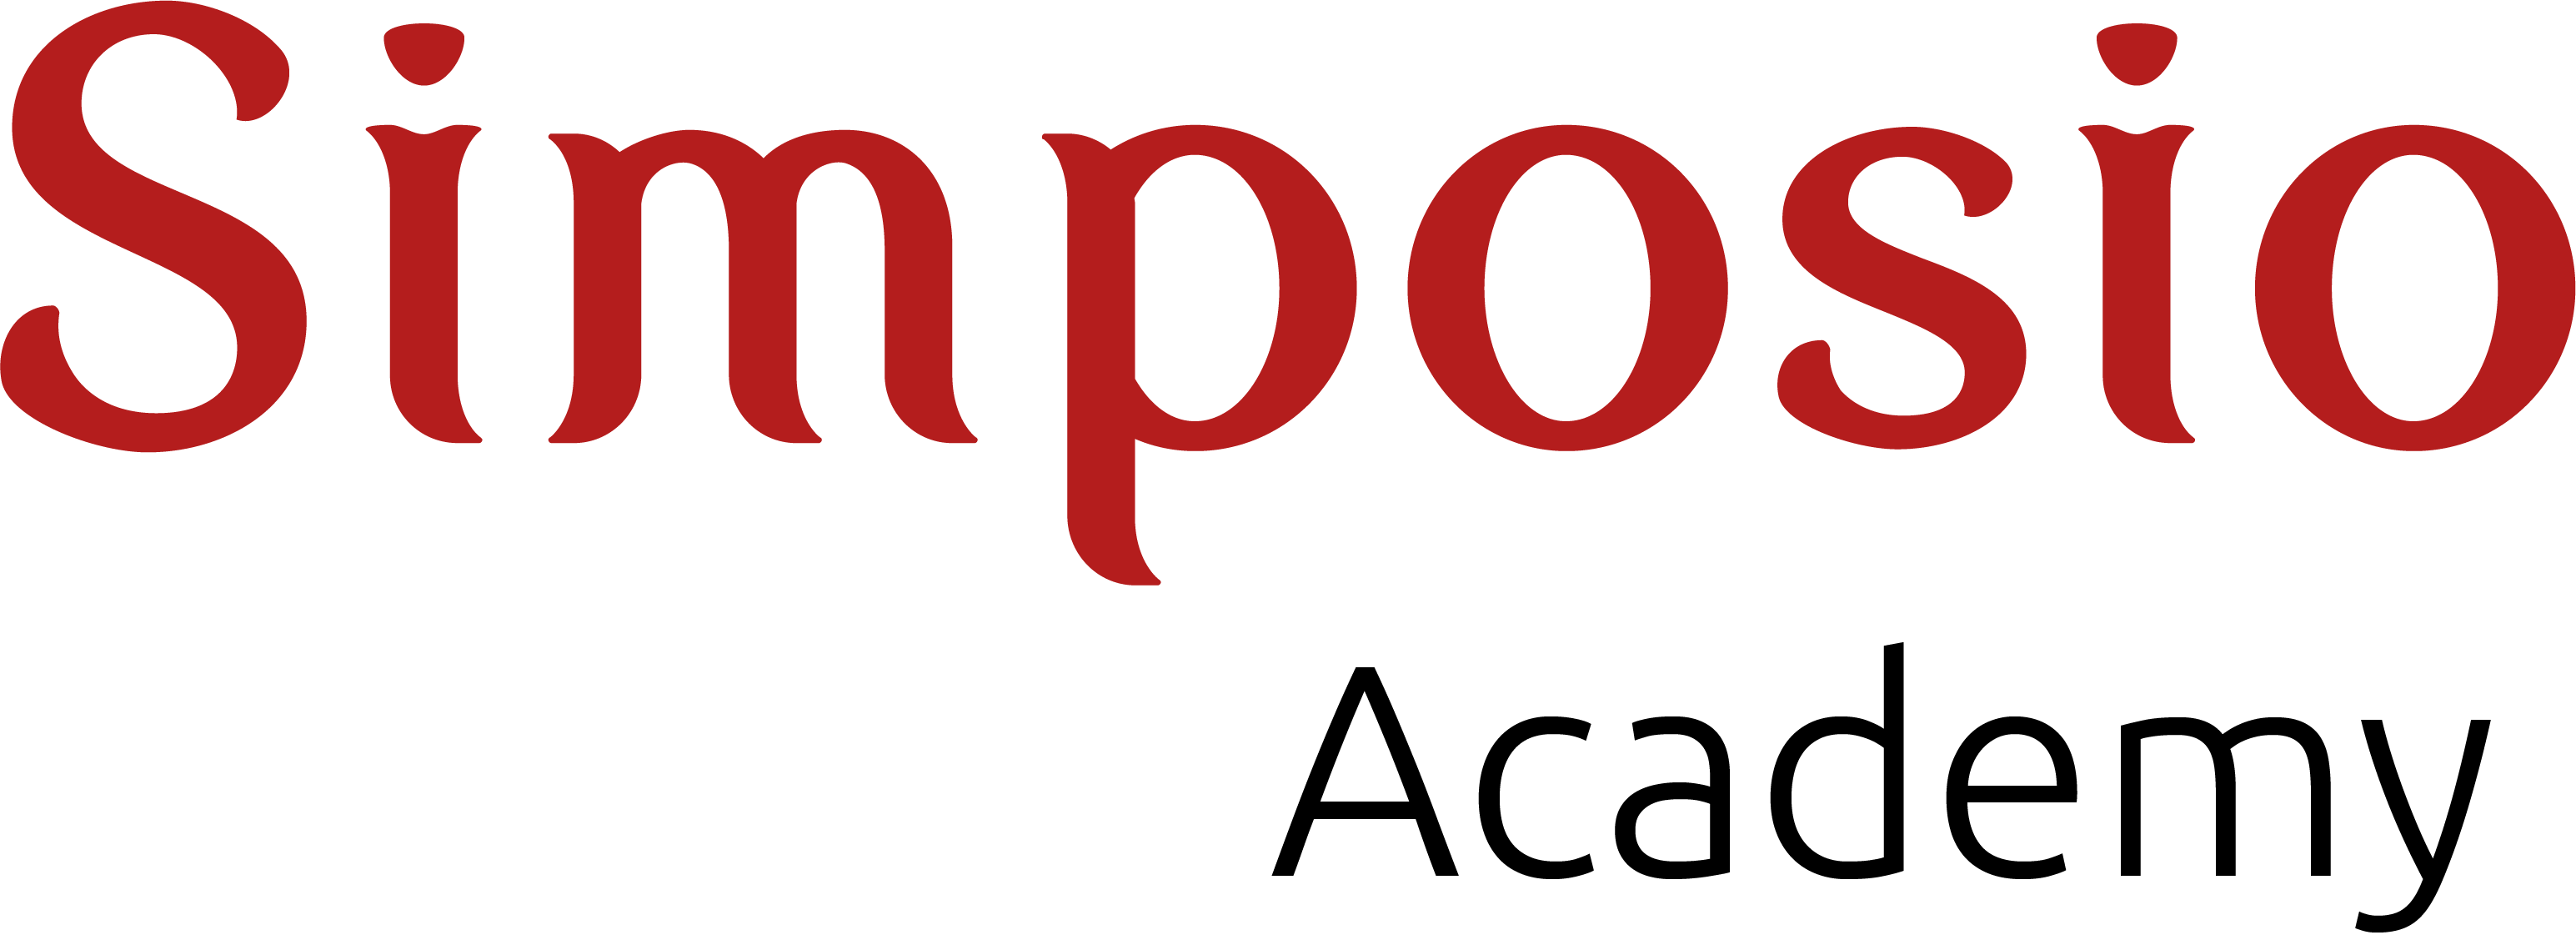 Simposio-Academy